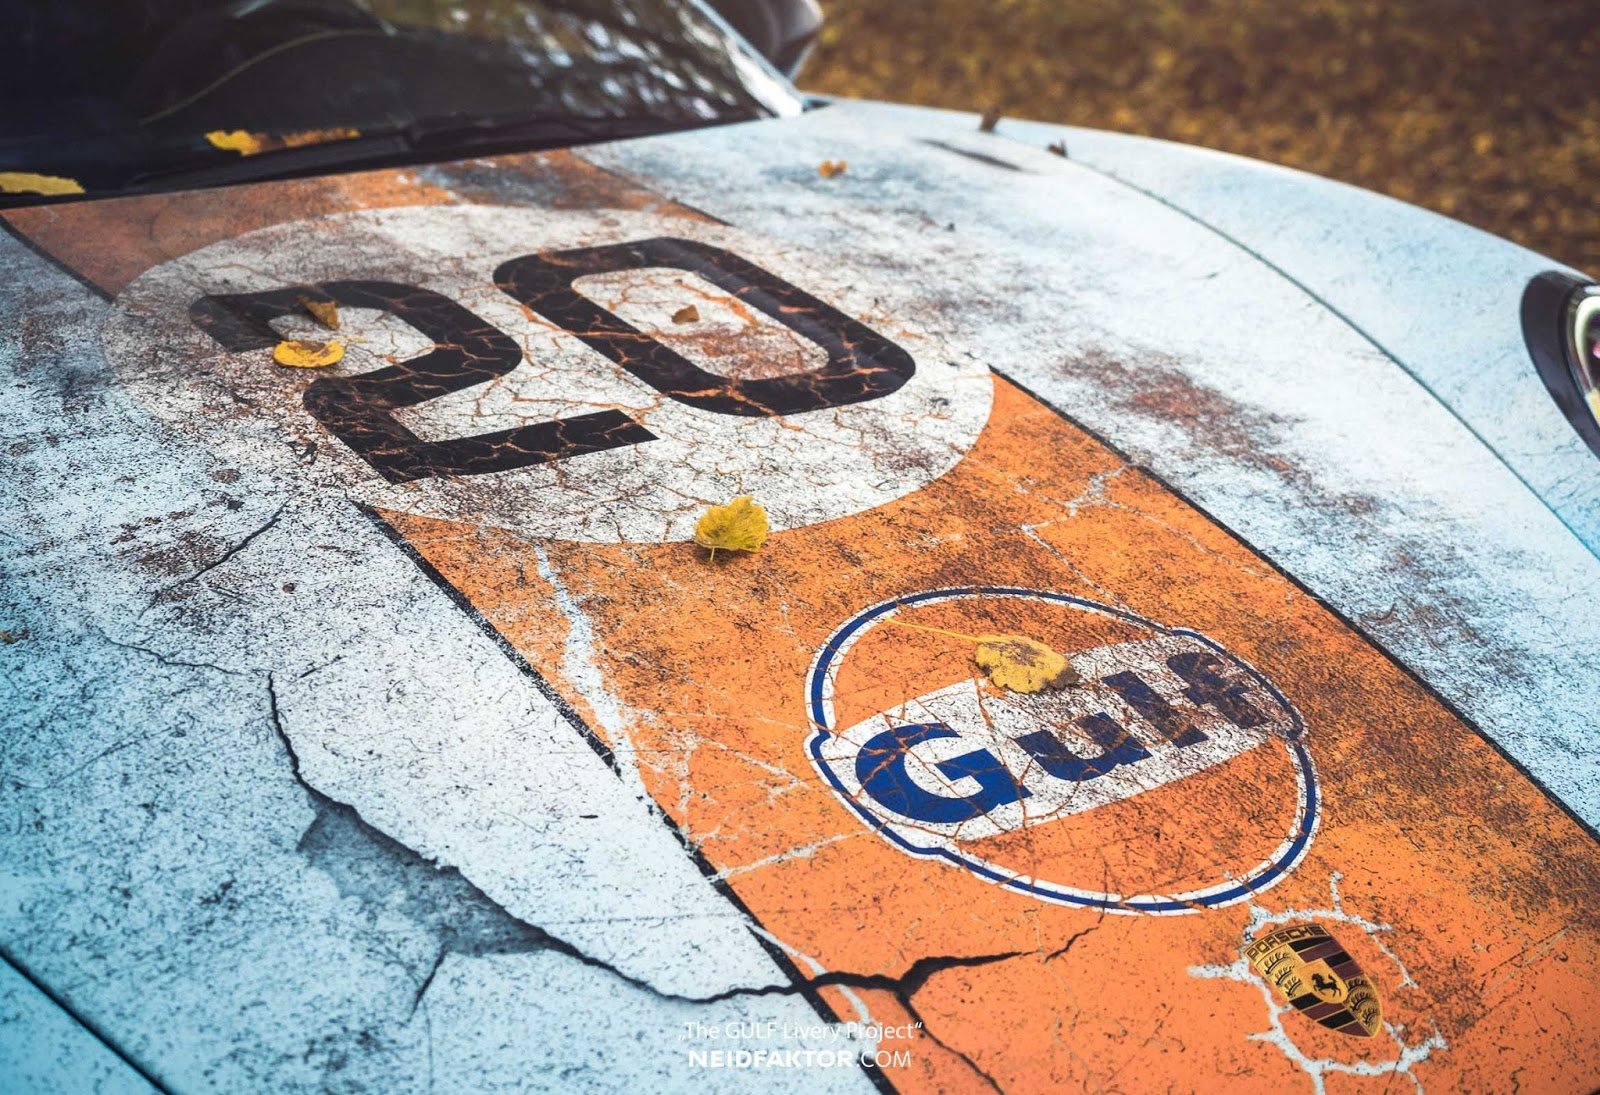 Porsche 911 GT3 RS "GULF Livery Project"